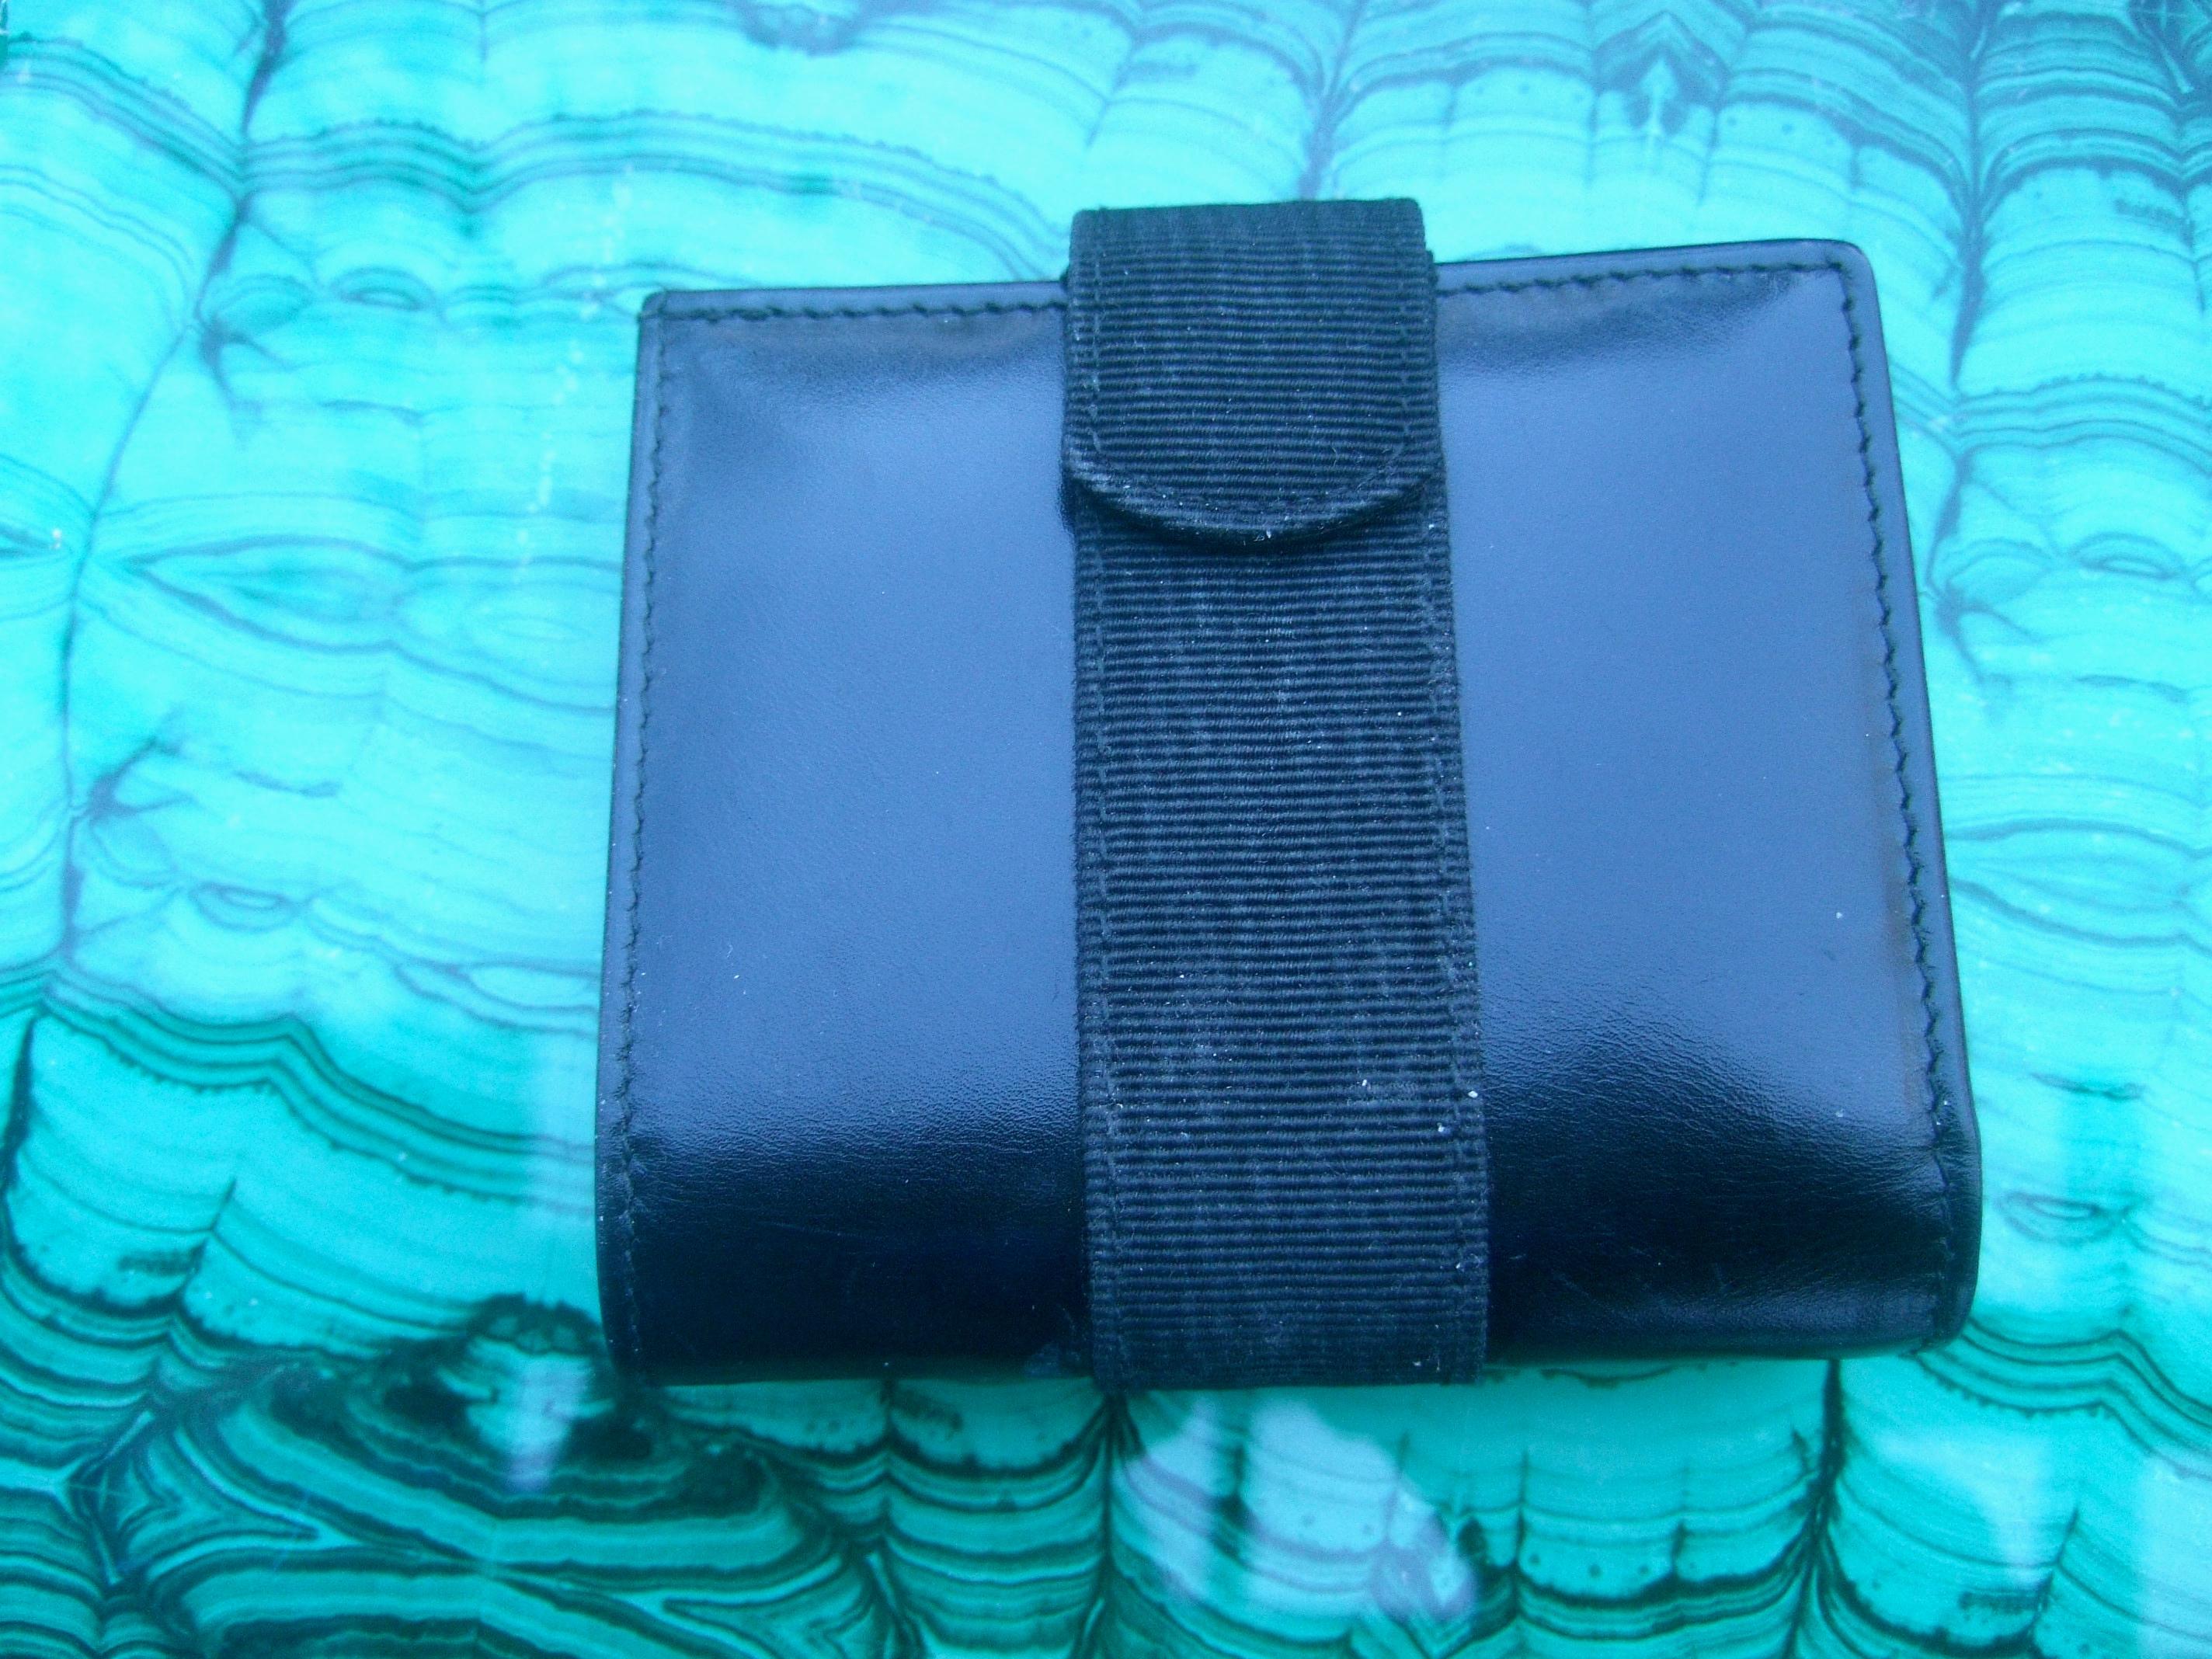 Salvatore Ferragamo Italy Black Leather Ribbon Trim Wallet in Box c 1990s 6